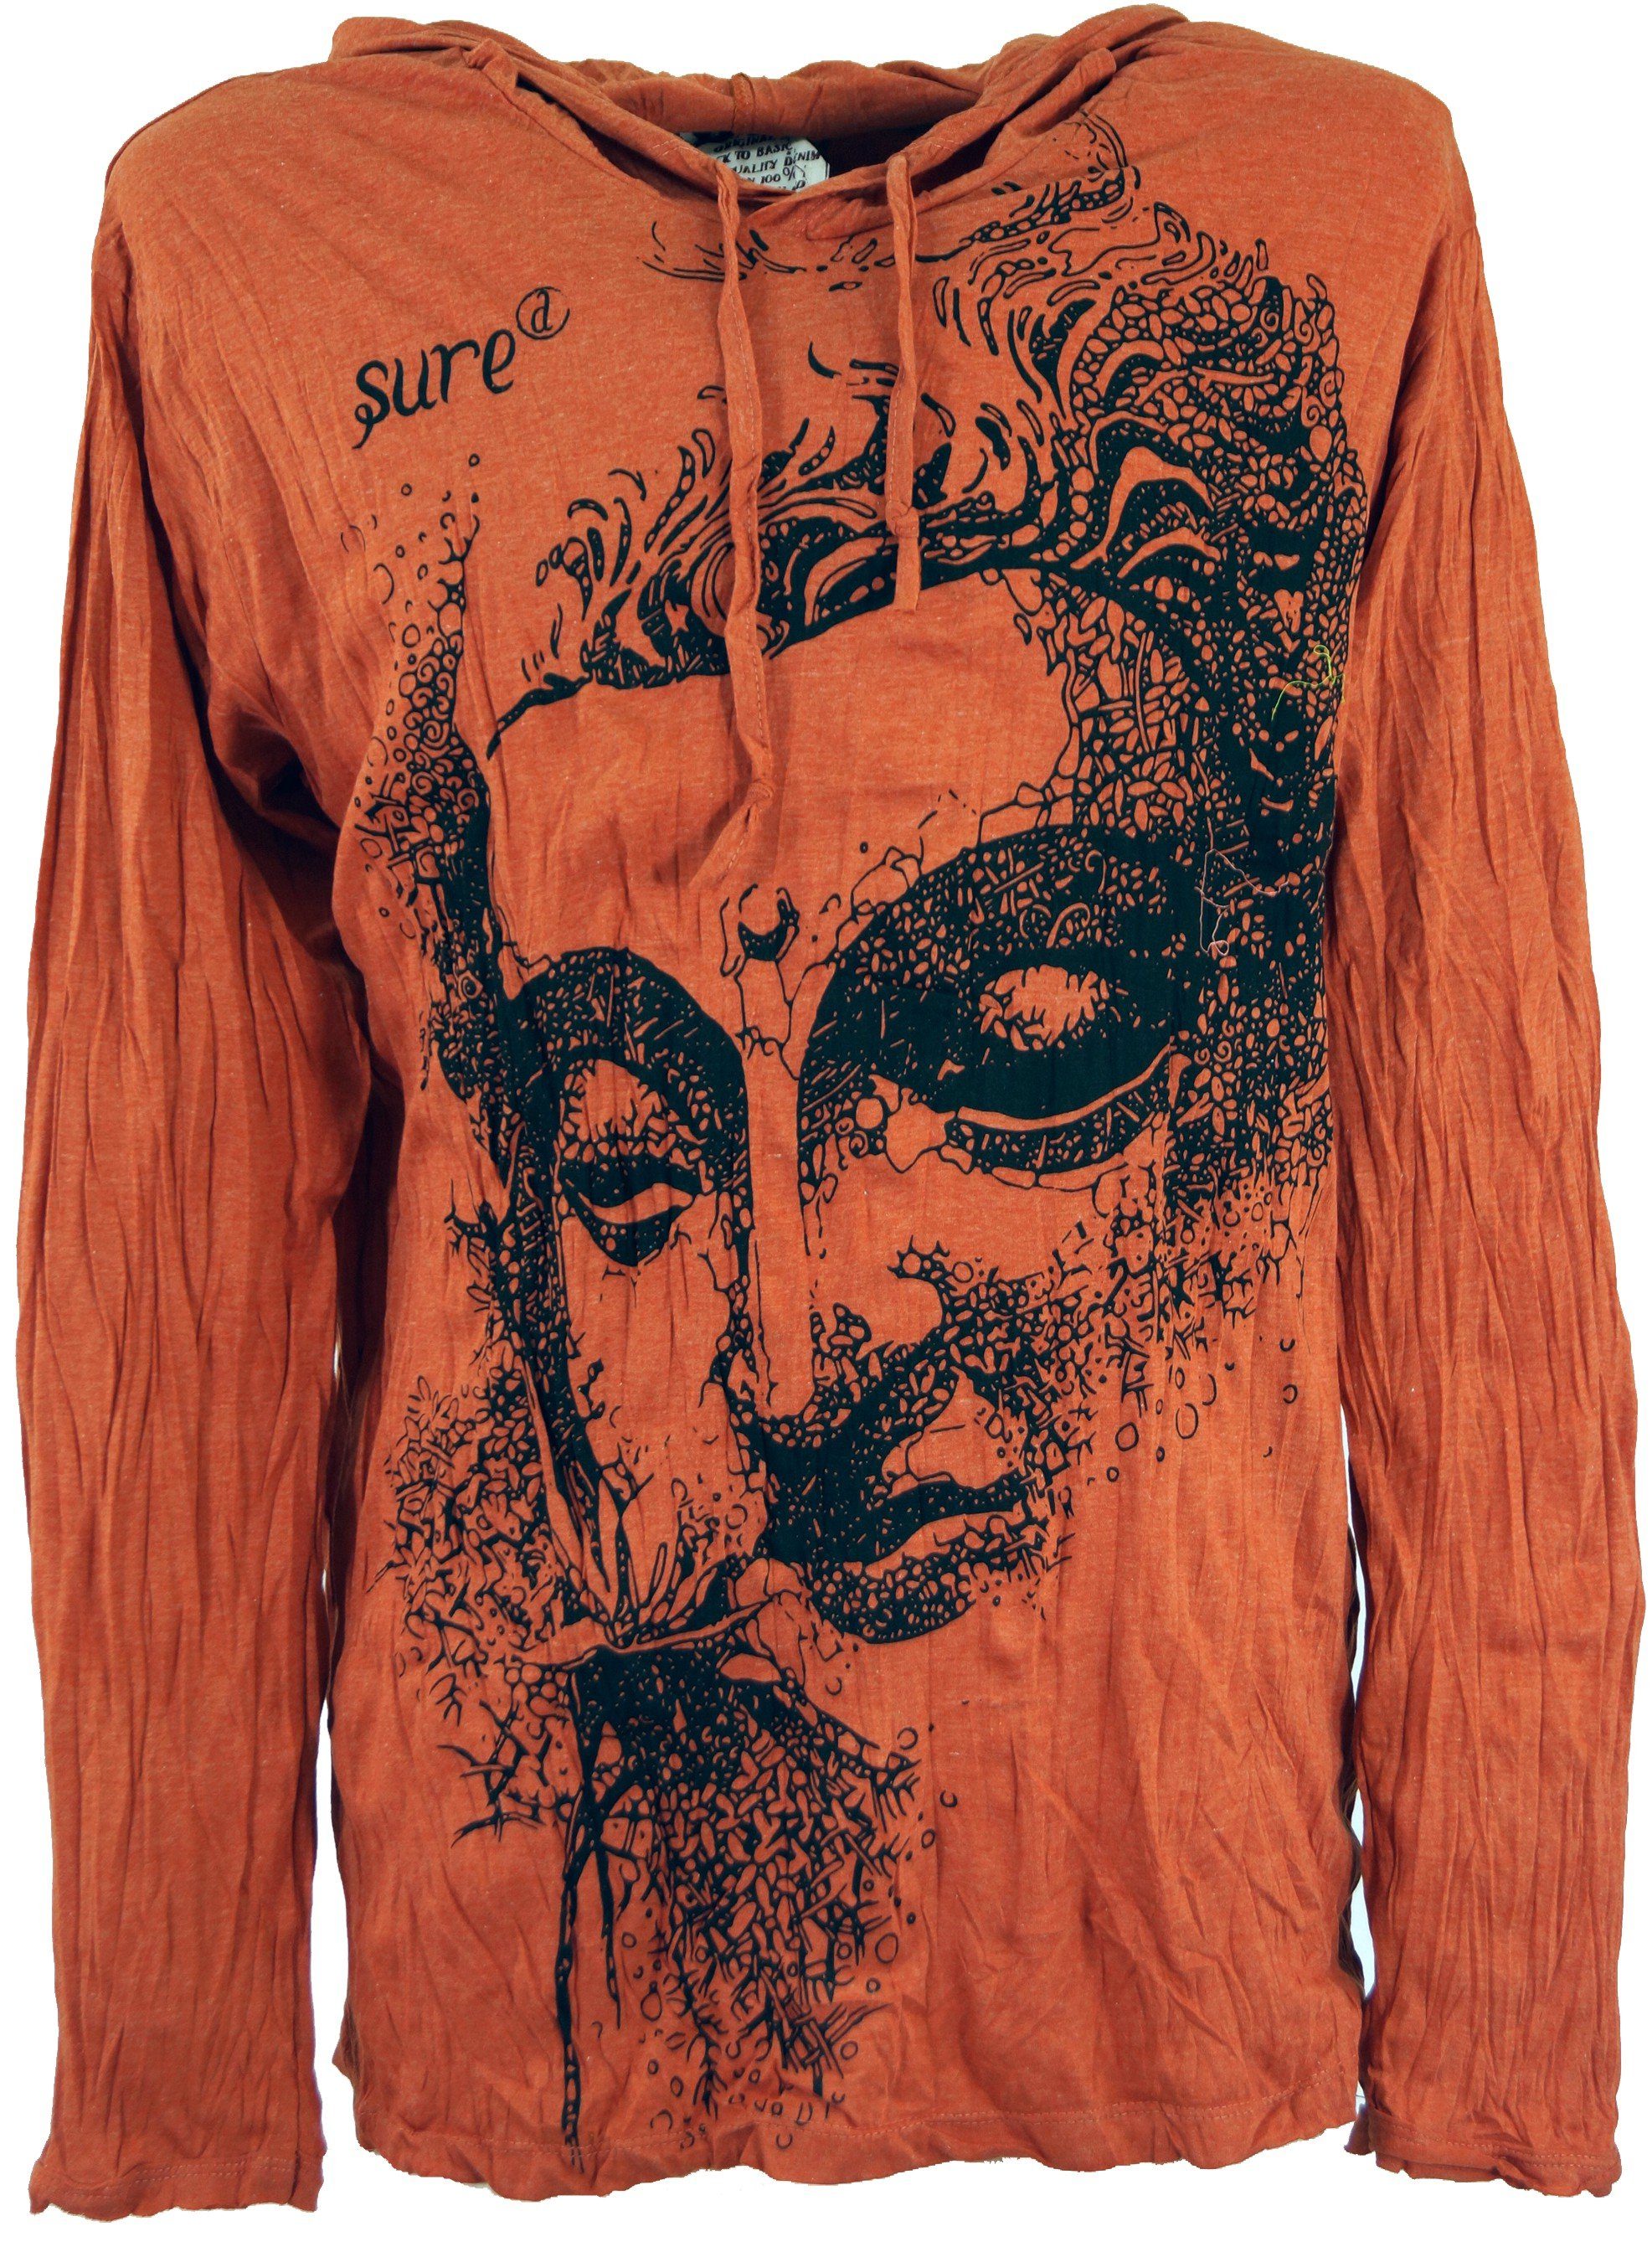 Guru-Shop T-Shirt Langarmshirt, rostorange Dreaming Bekleidung Style, alternative Buddha.. Goa Kapuzenshirt Festival, Sure